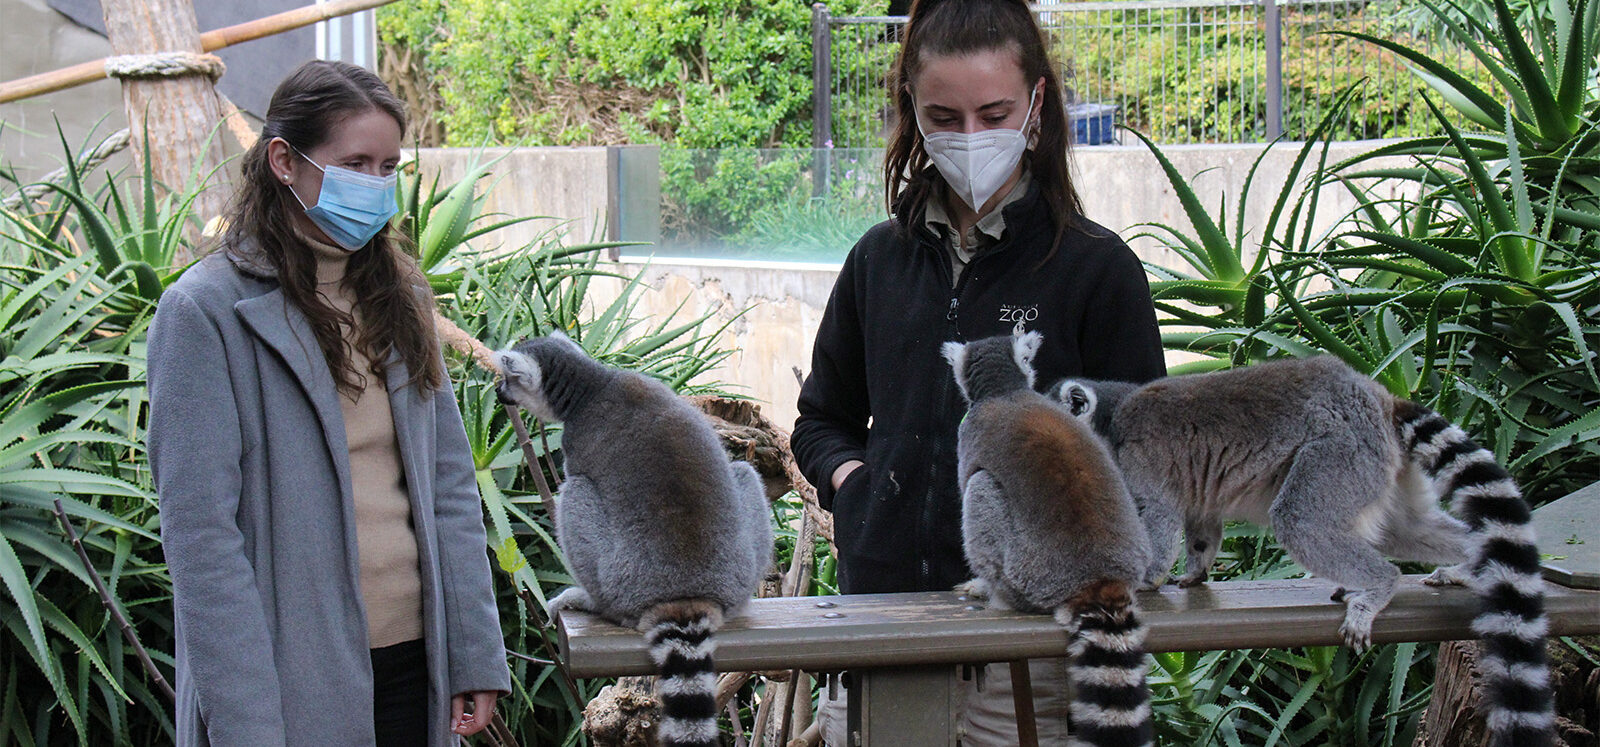 Lemur Encounter at Adelaide Zoo - Let our lemurs leap on you